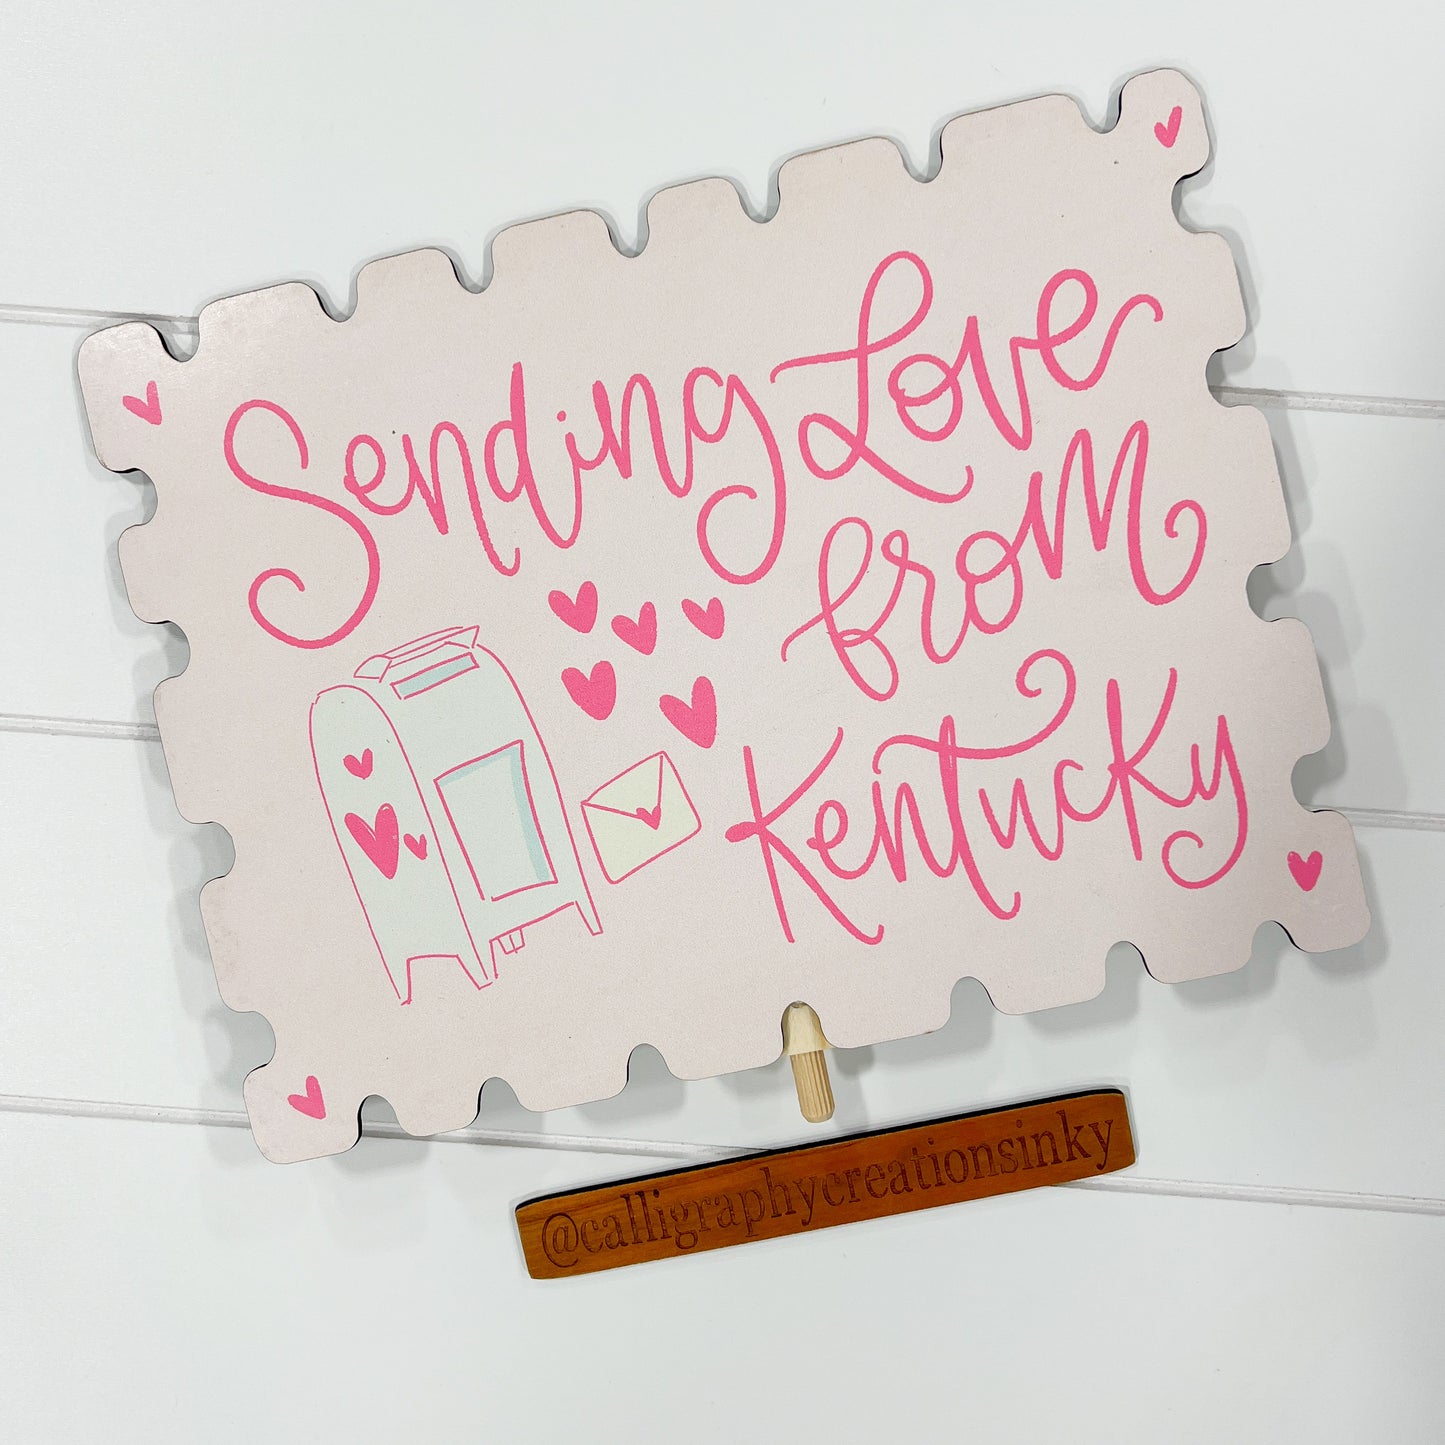 Sending Love From KY Topper | Doodles By Rebekah Topper